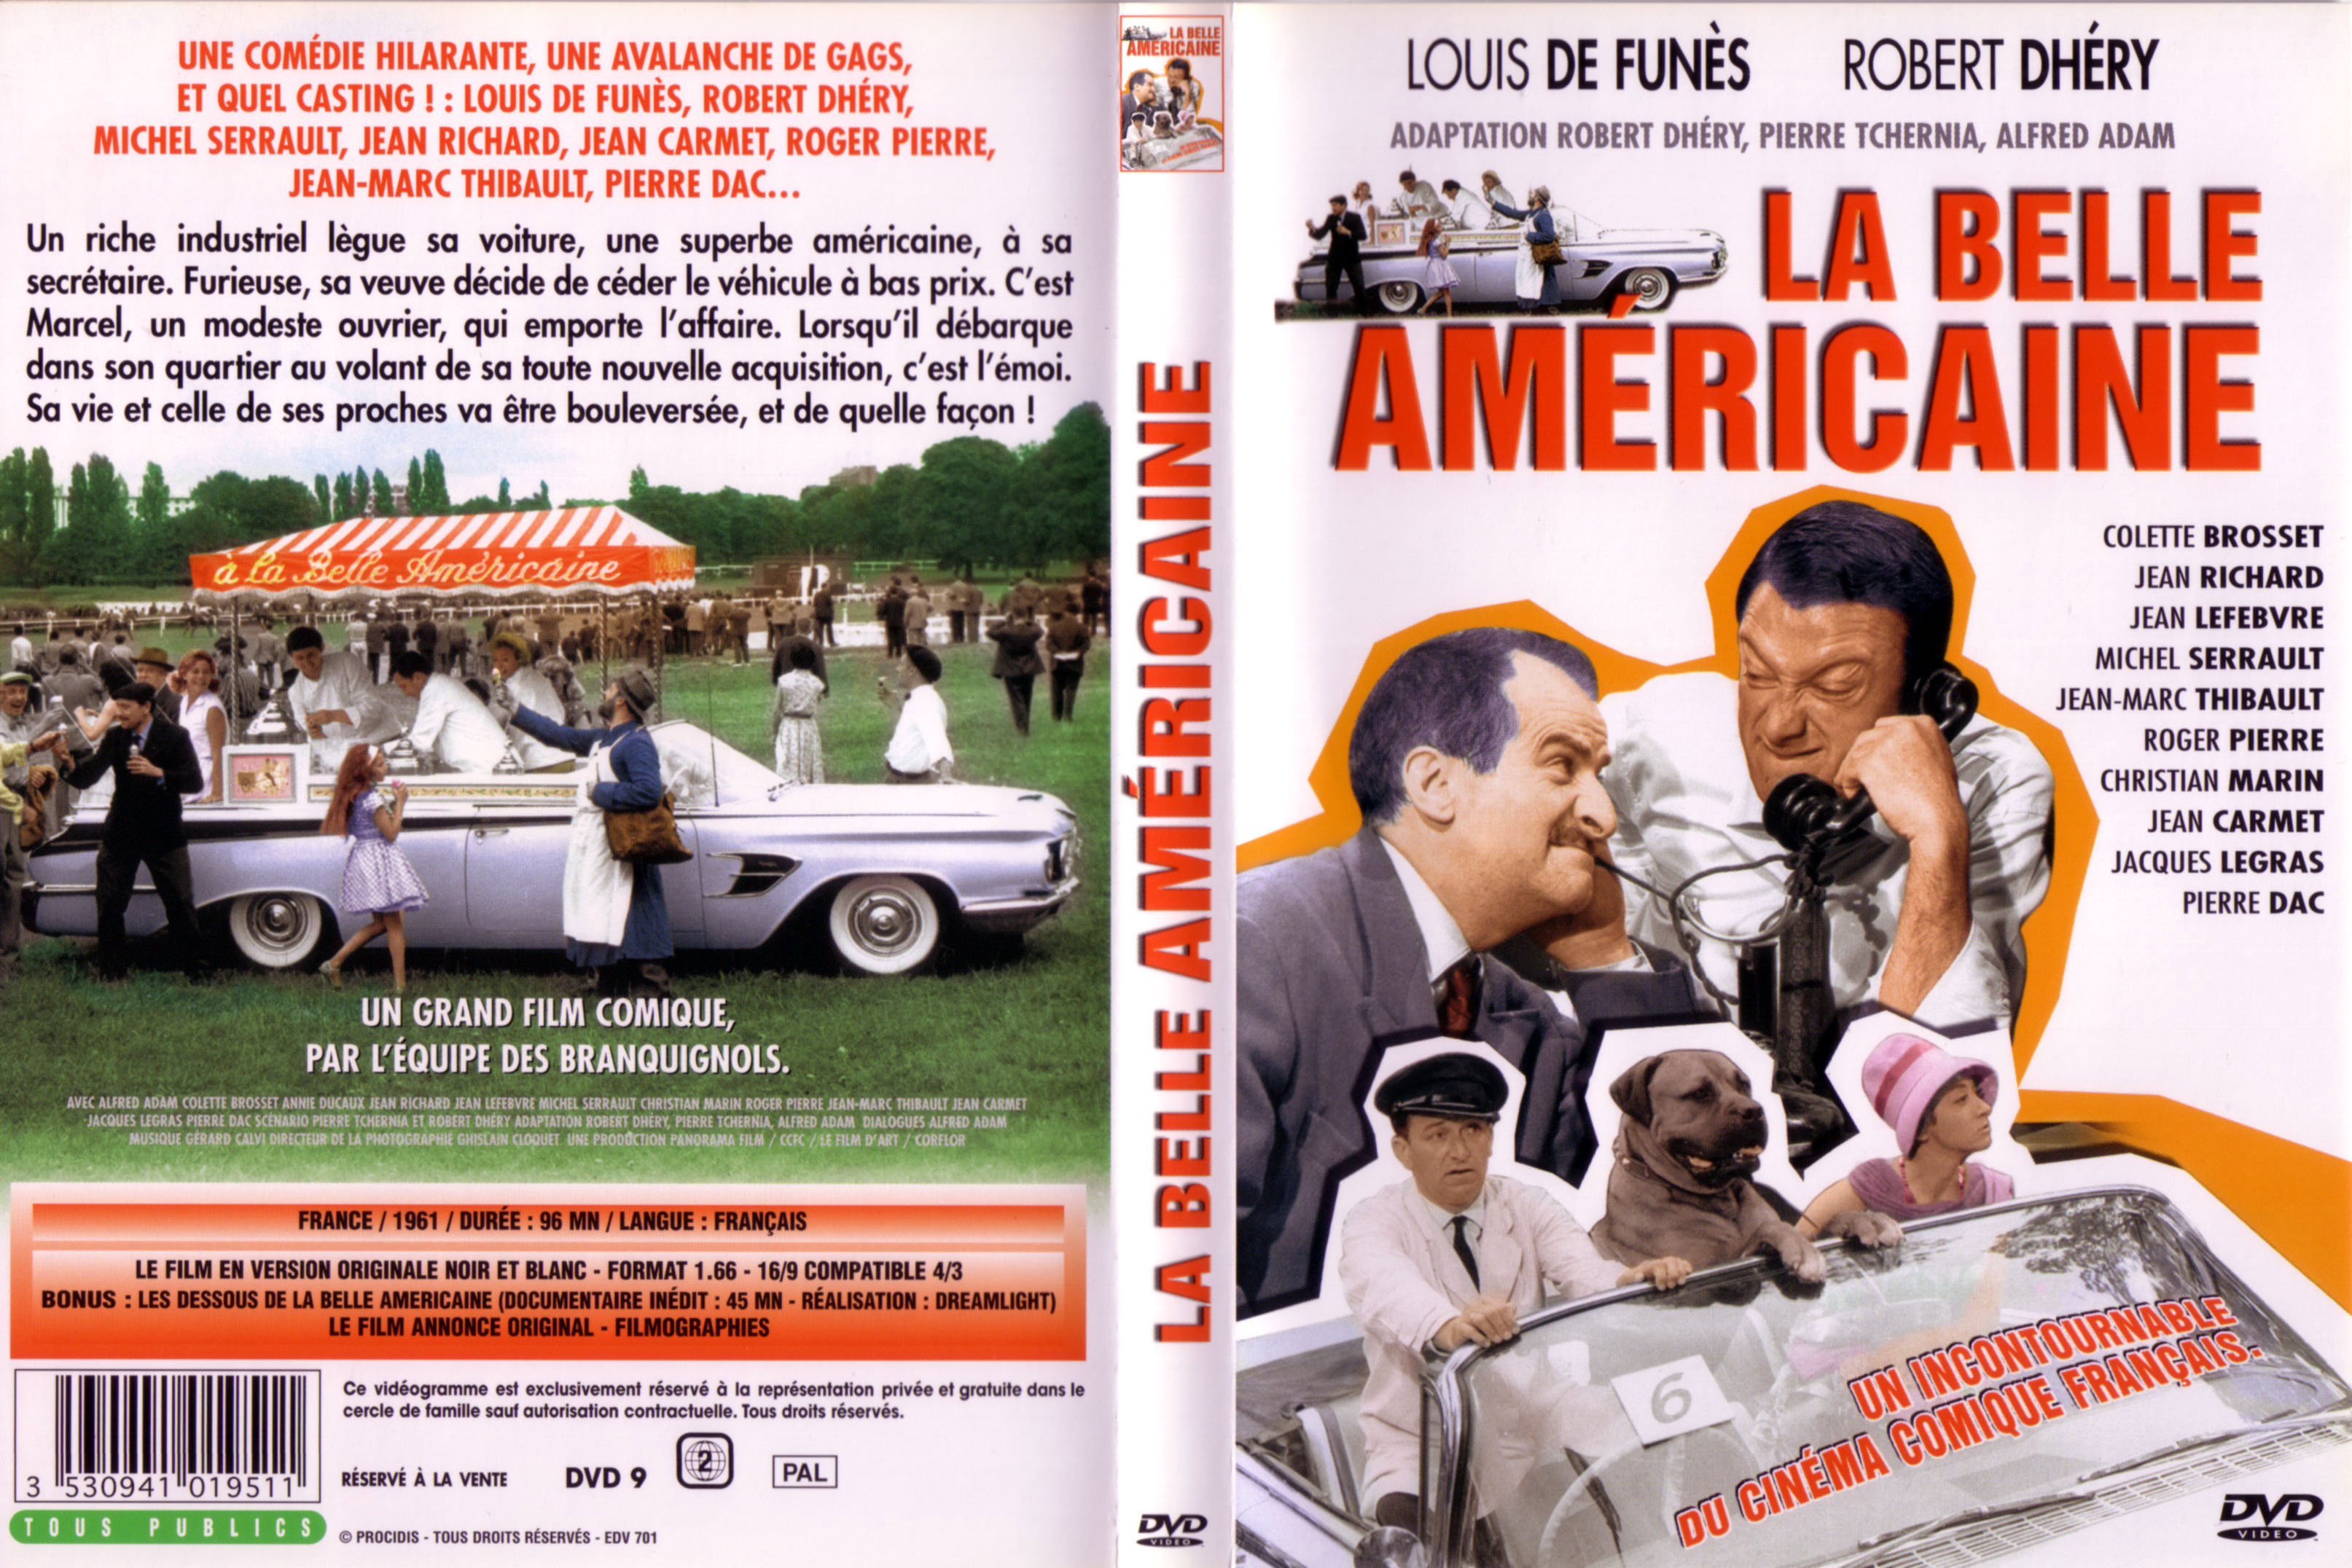 Jaquette DVD La belle americaine v2